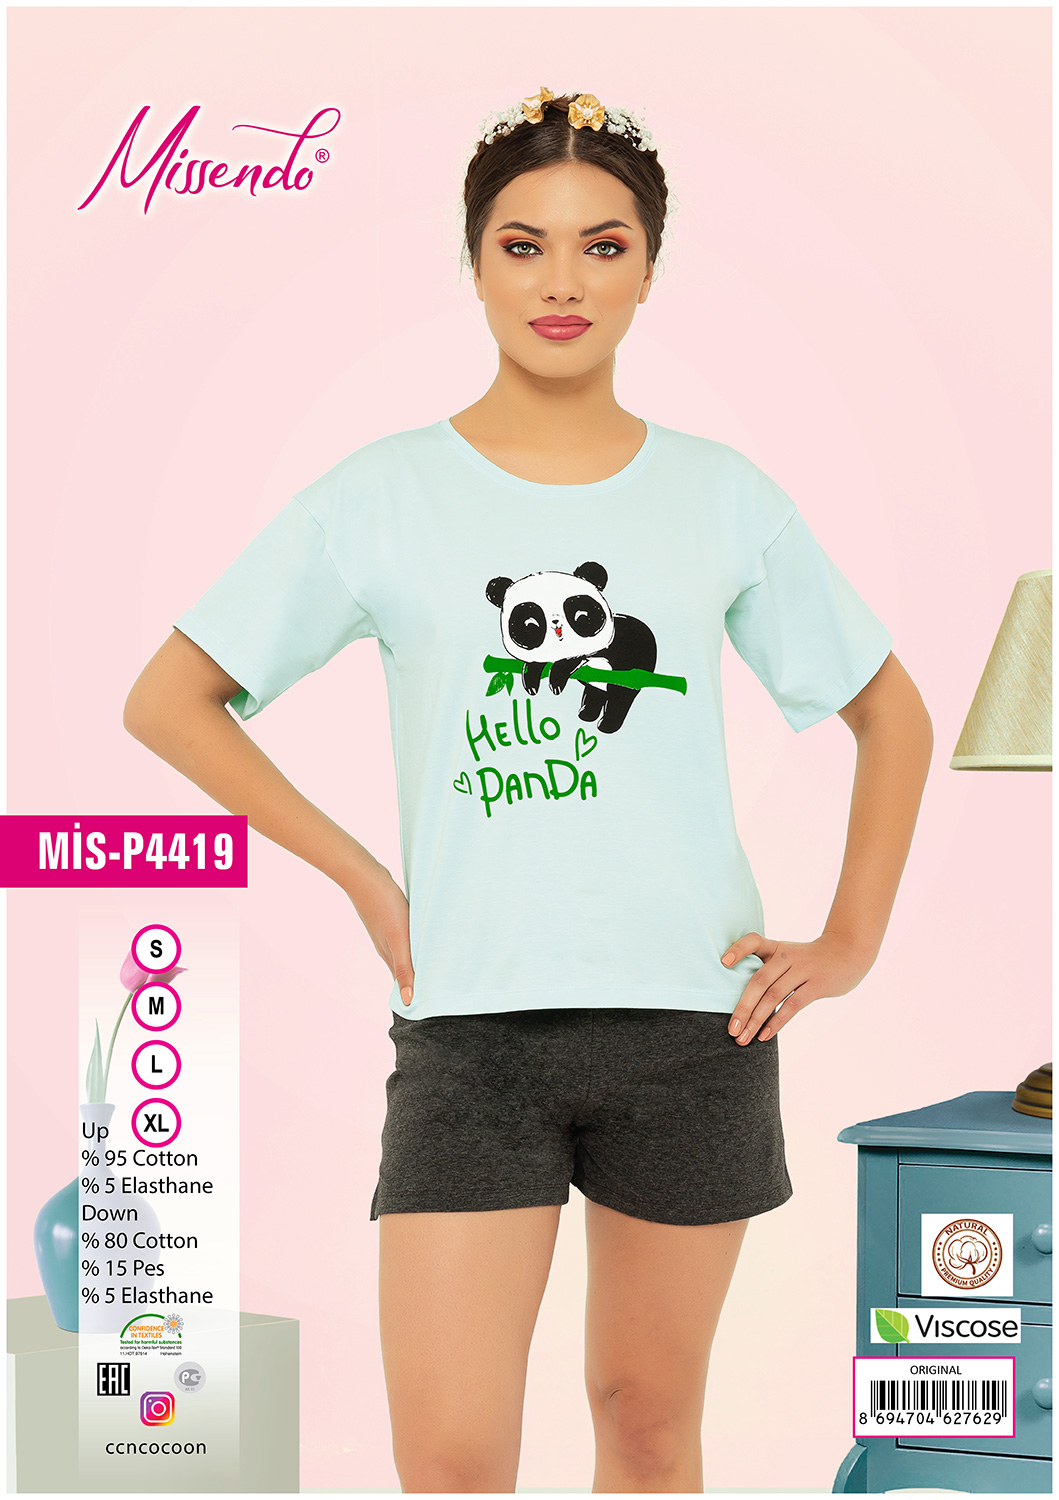 Комплект (футболка, шорты) P-4419 Missendo рис. 1